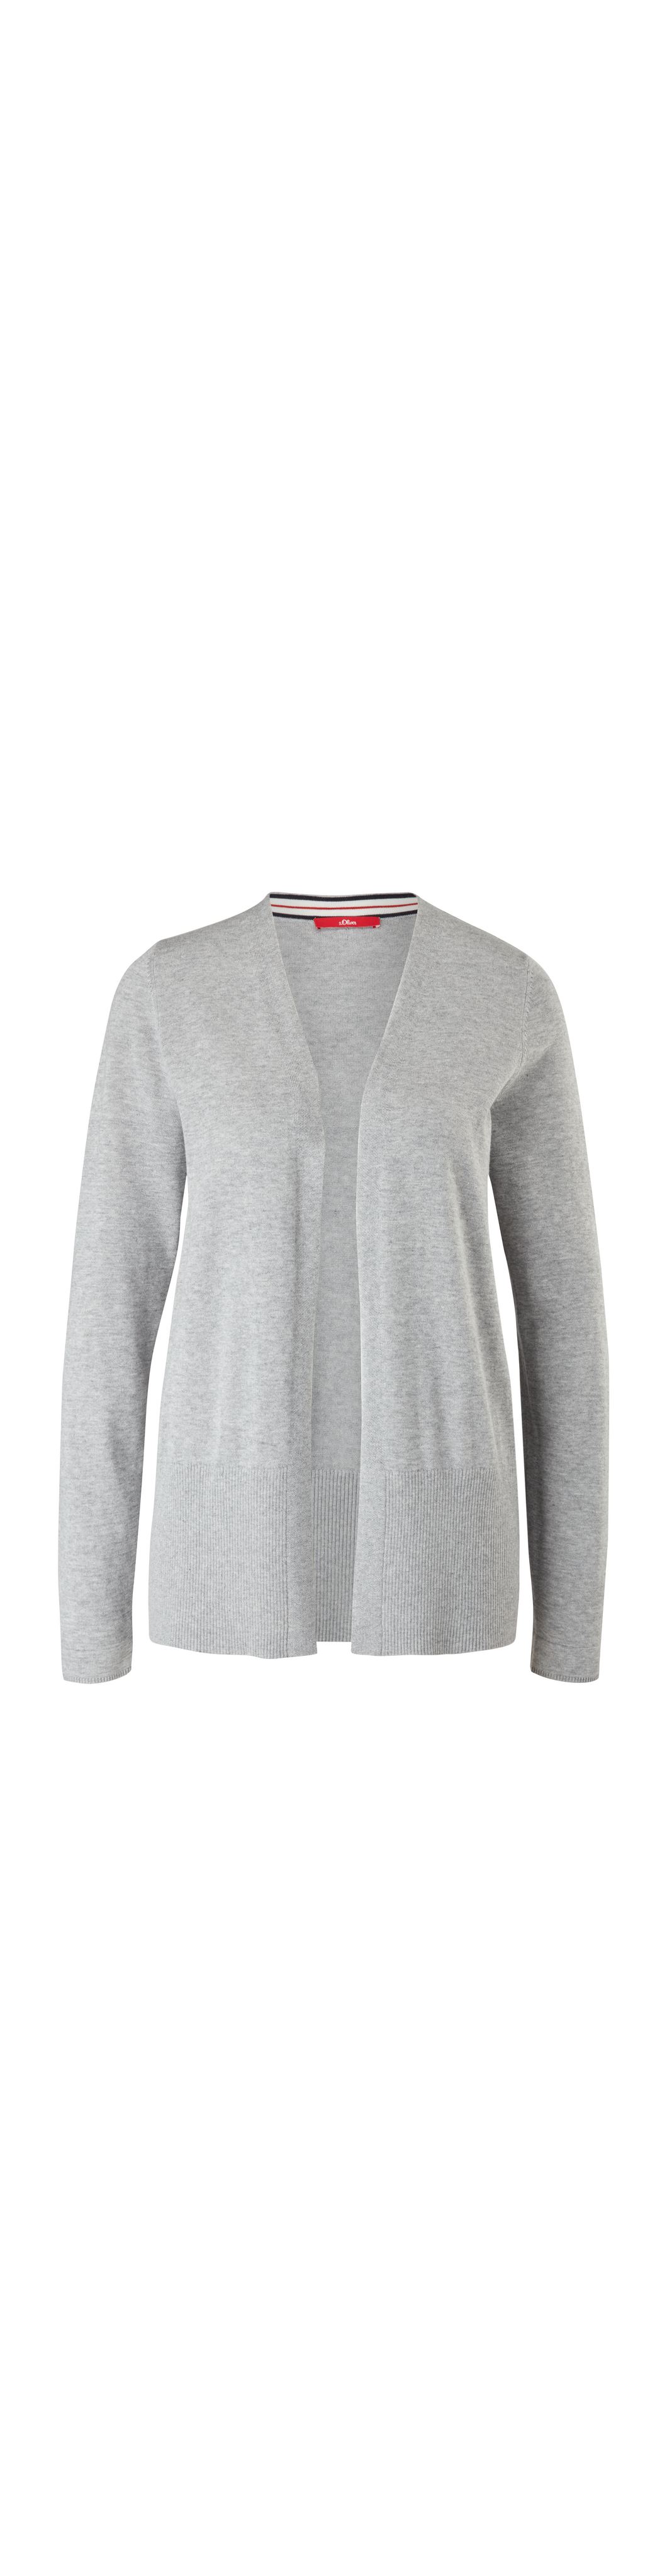 Oysho Strickjacke Rabatt 79 % DAMEN Pullovers & Sweatshirts Strickjacke Casual Grau S 